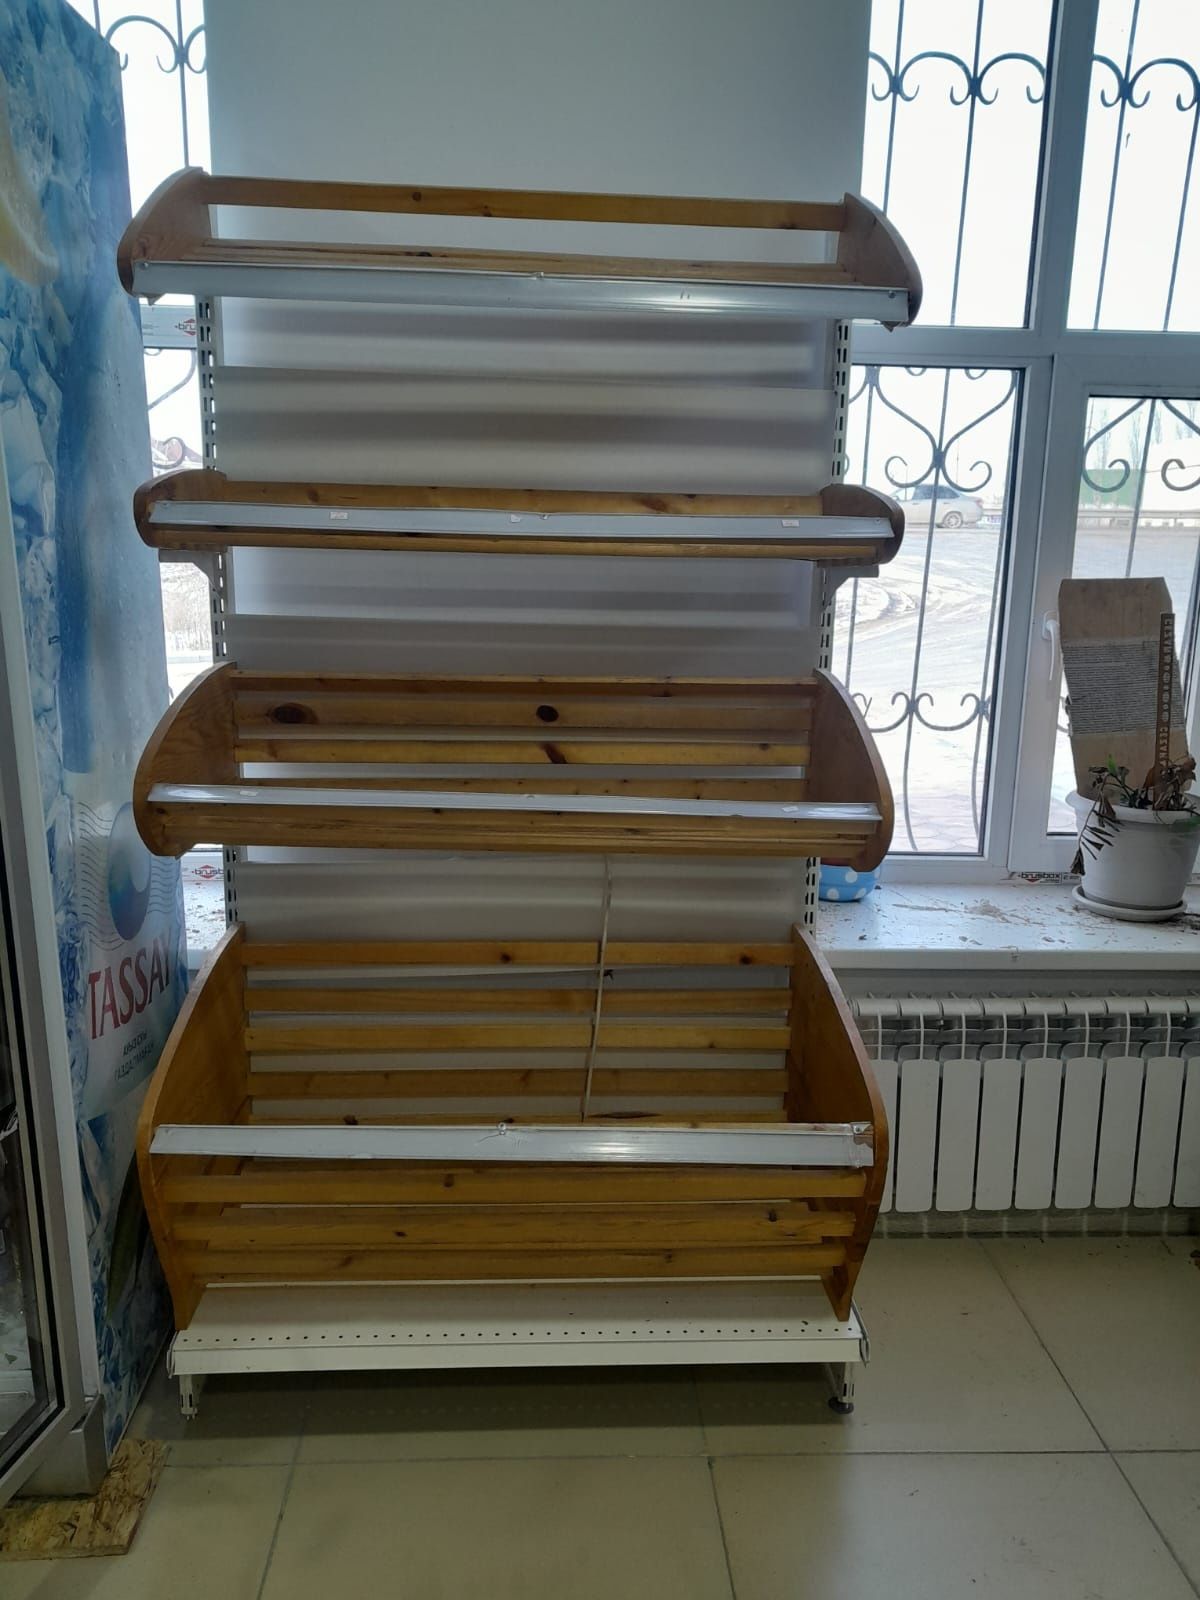 Хлебный стеллаж для магазина цена 50000 тенге,торг уместен.тел: 877821